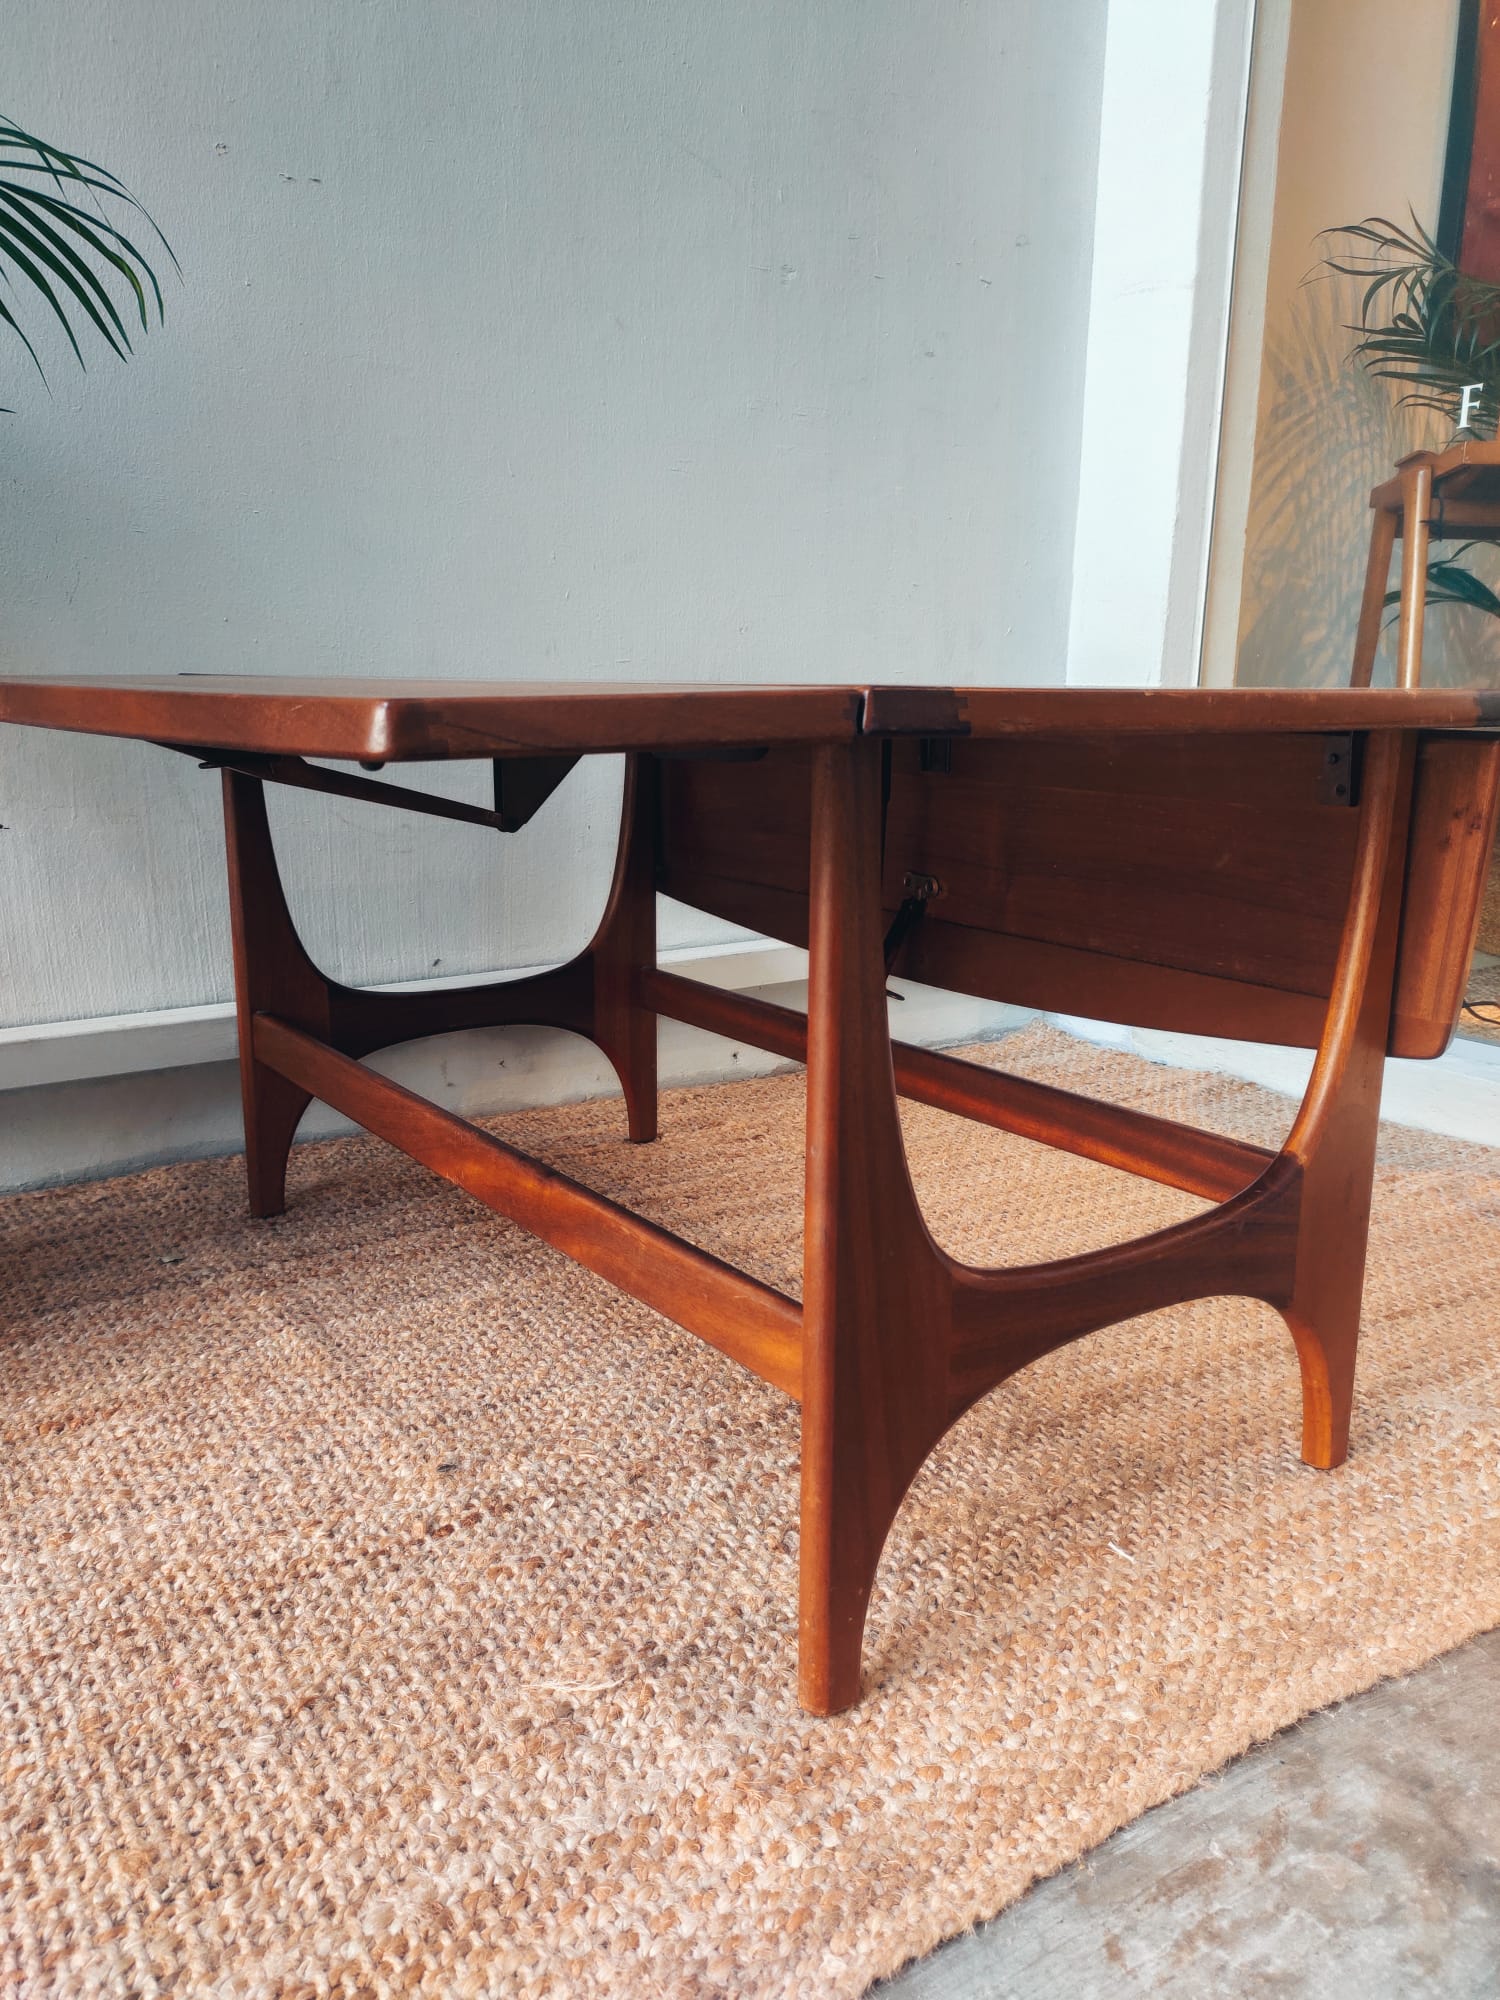 Stonehill Mid-century coffee table